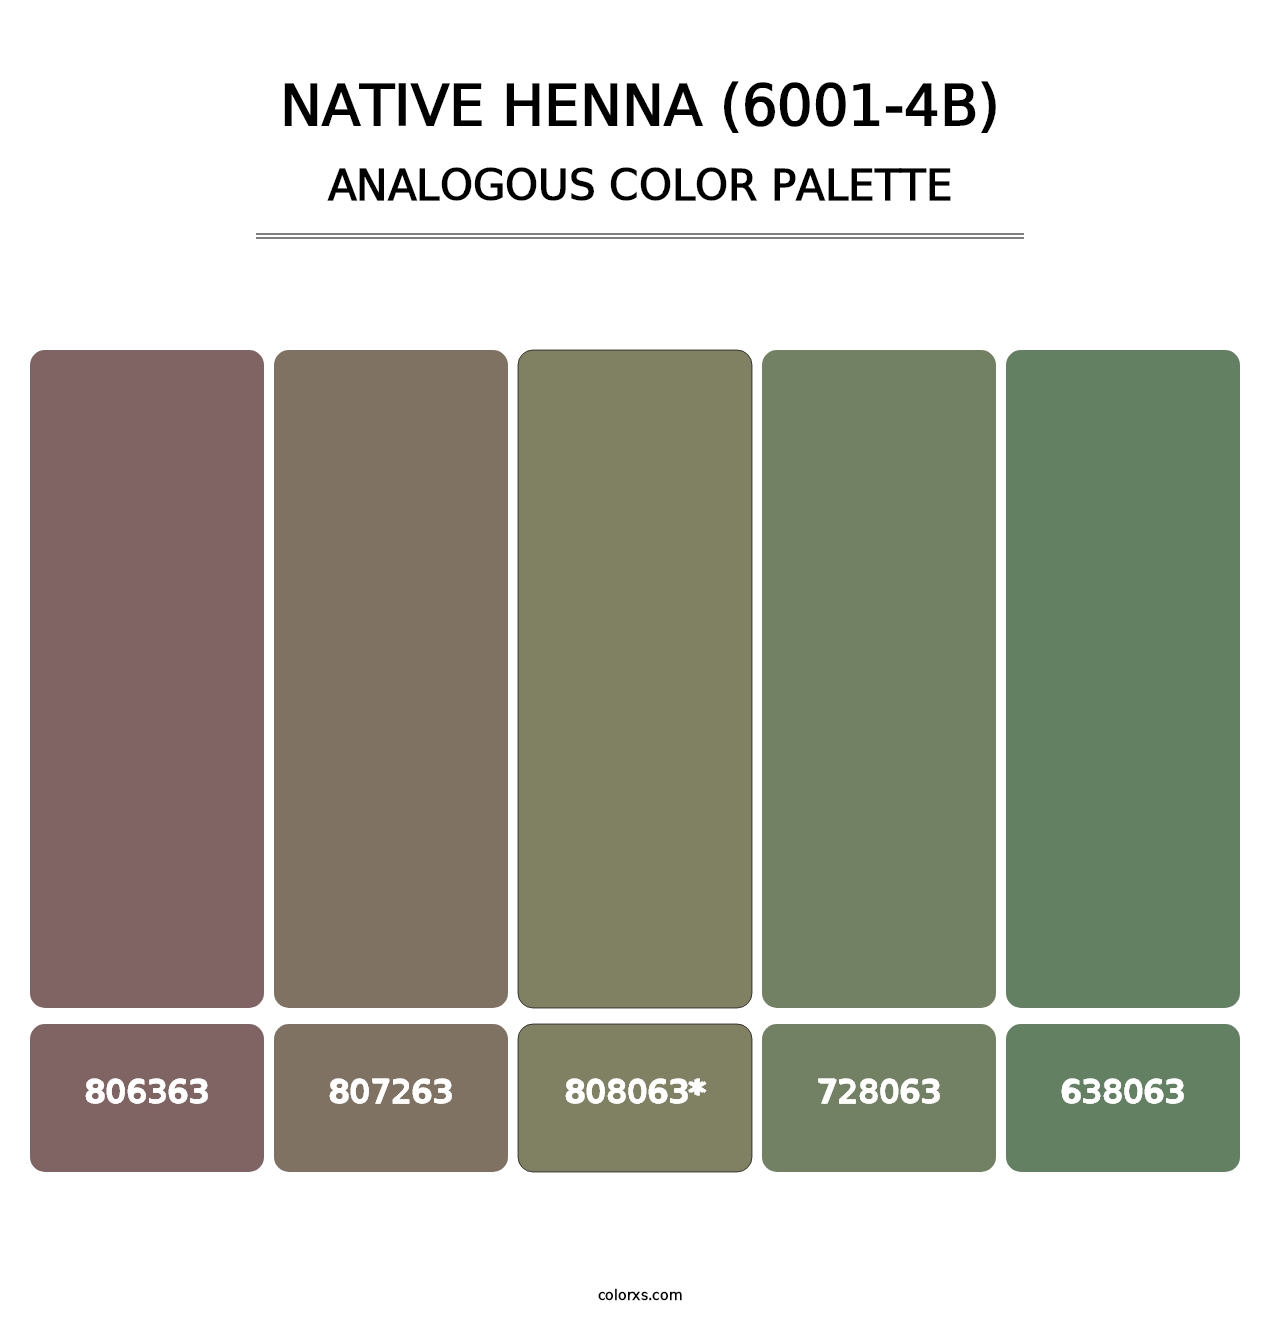 Native Henna (6001-4B) - Analogous Color Palette